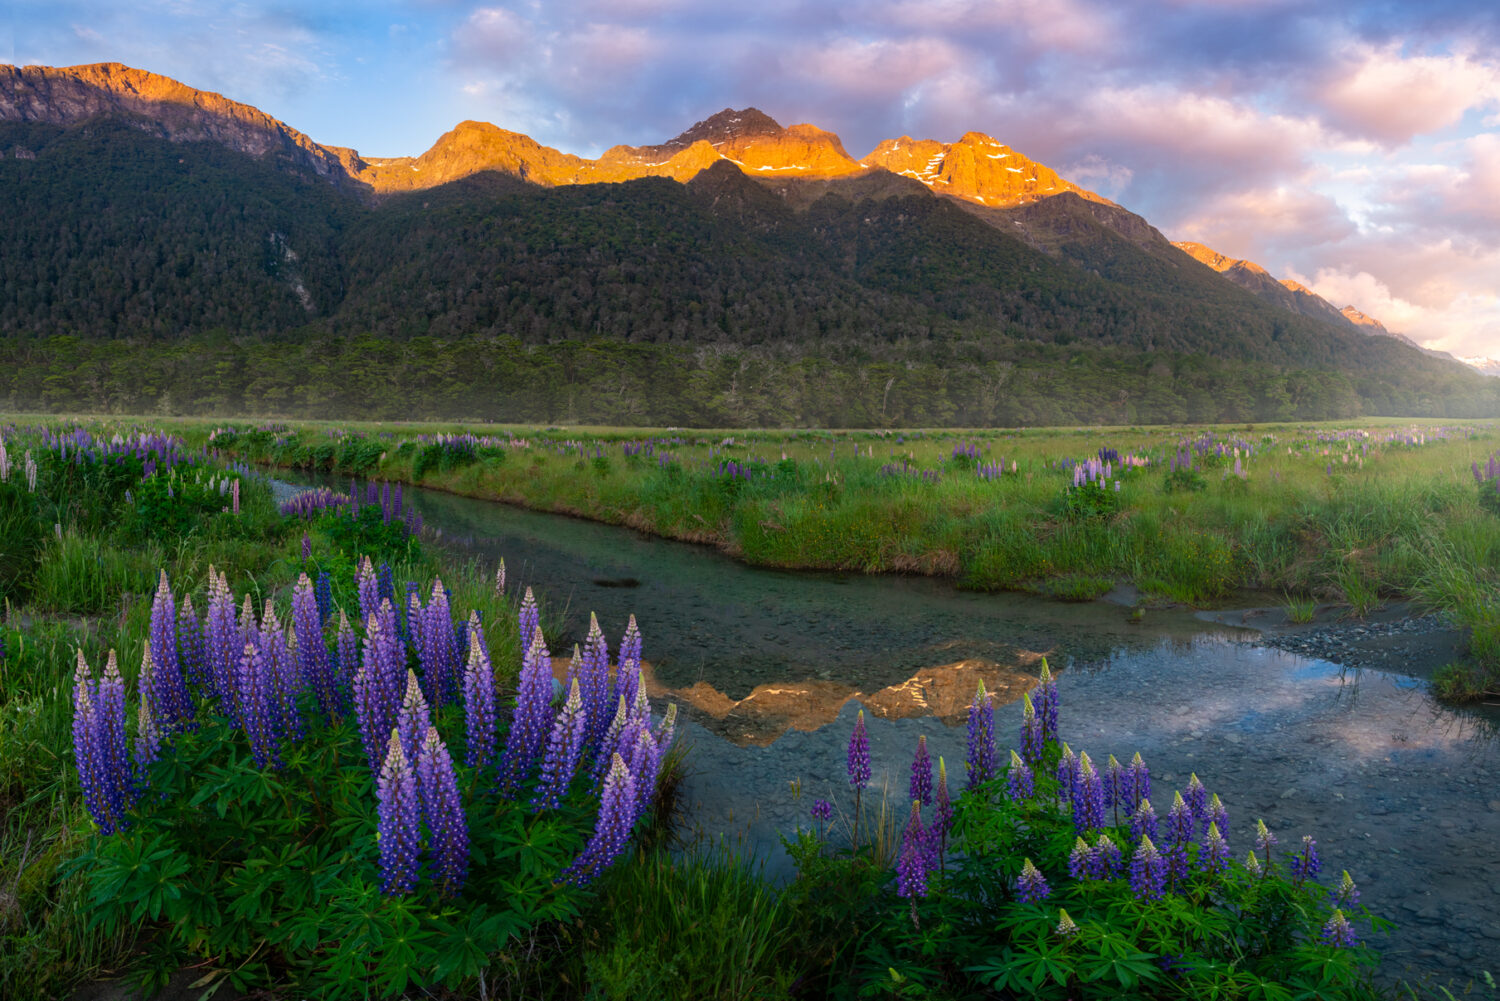 Morning light on the mountains, Fiordland New Zealand